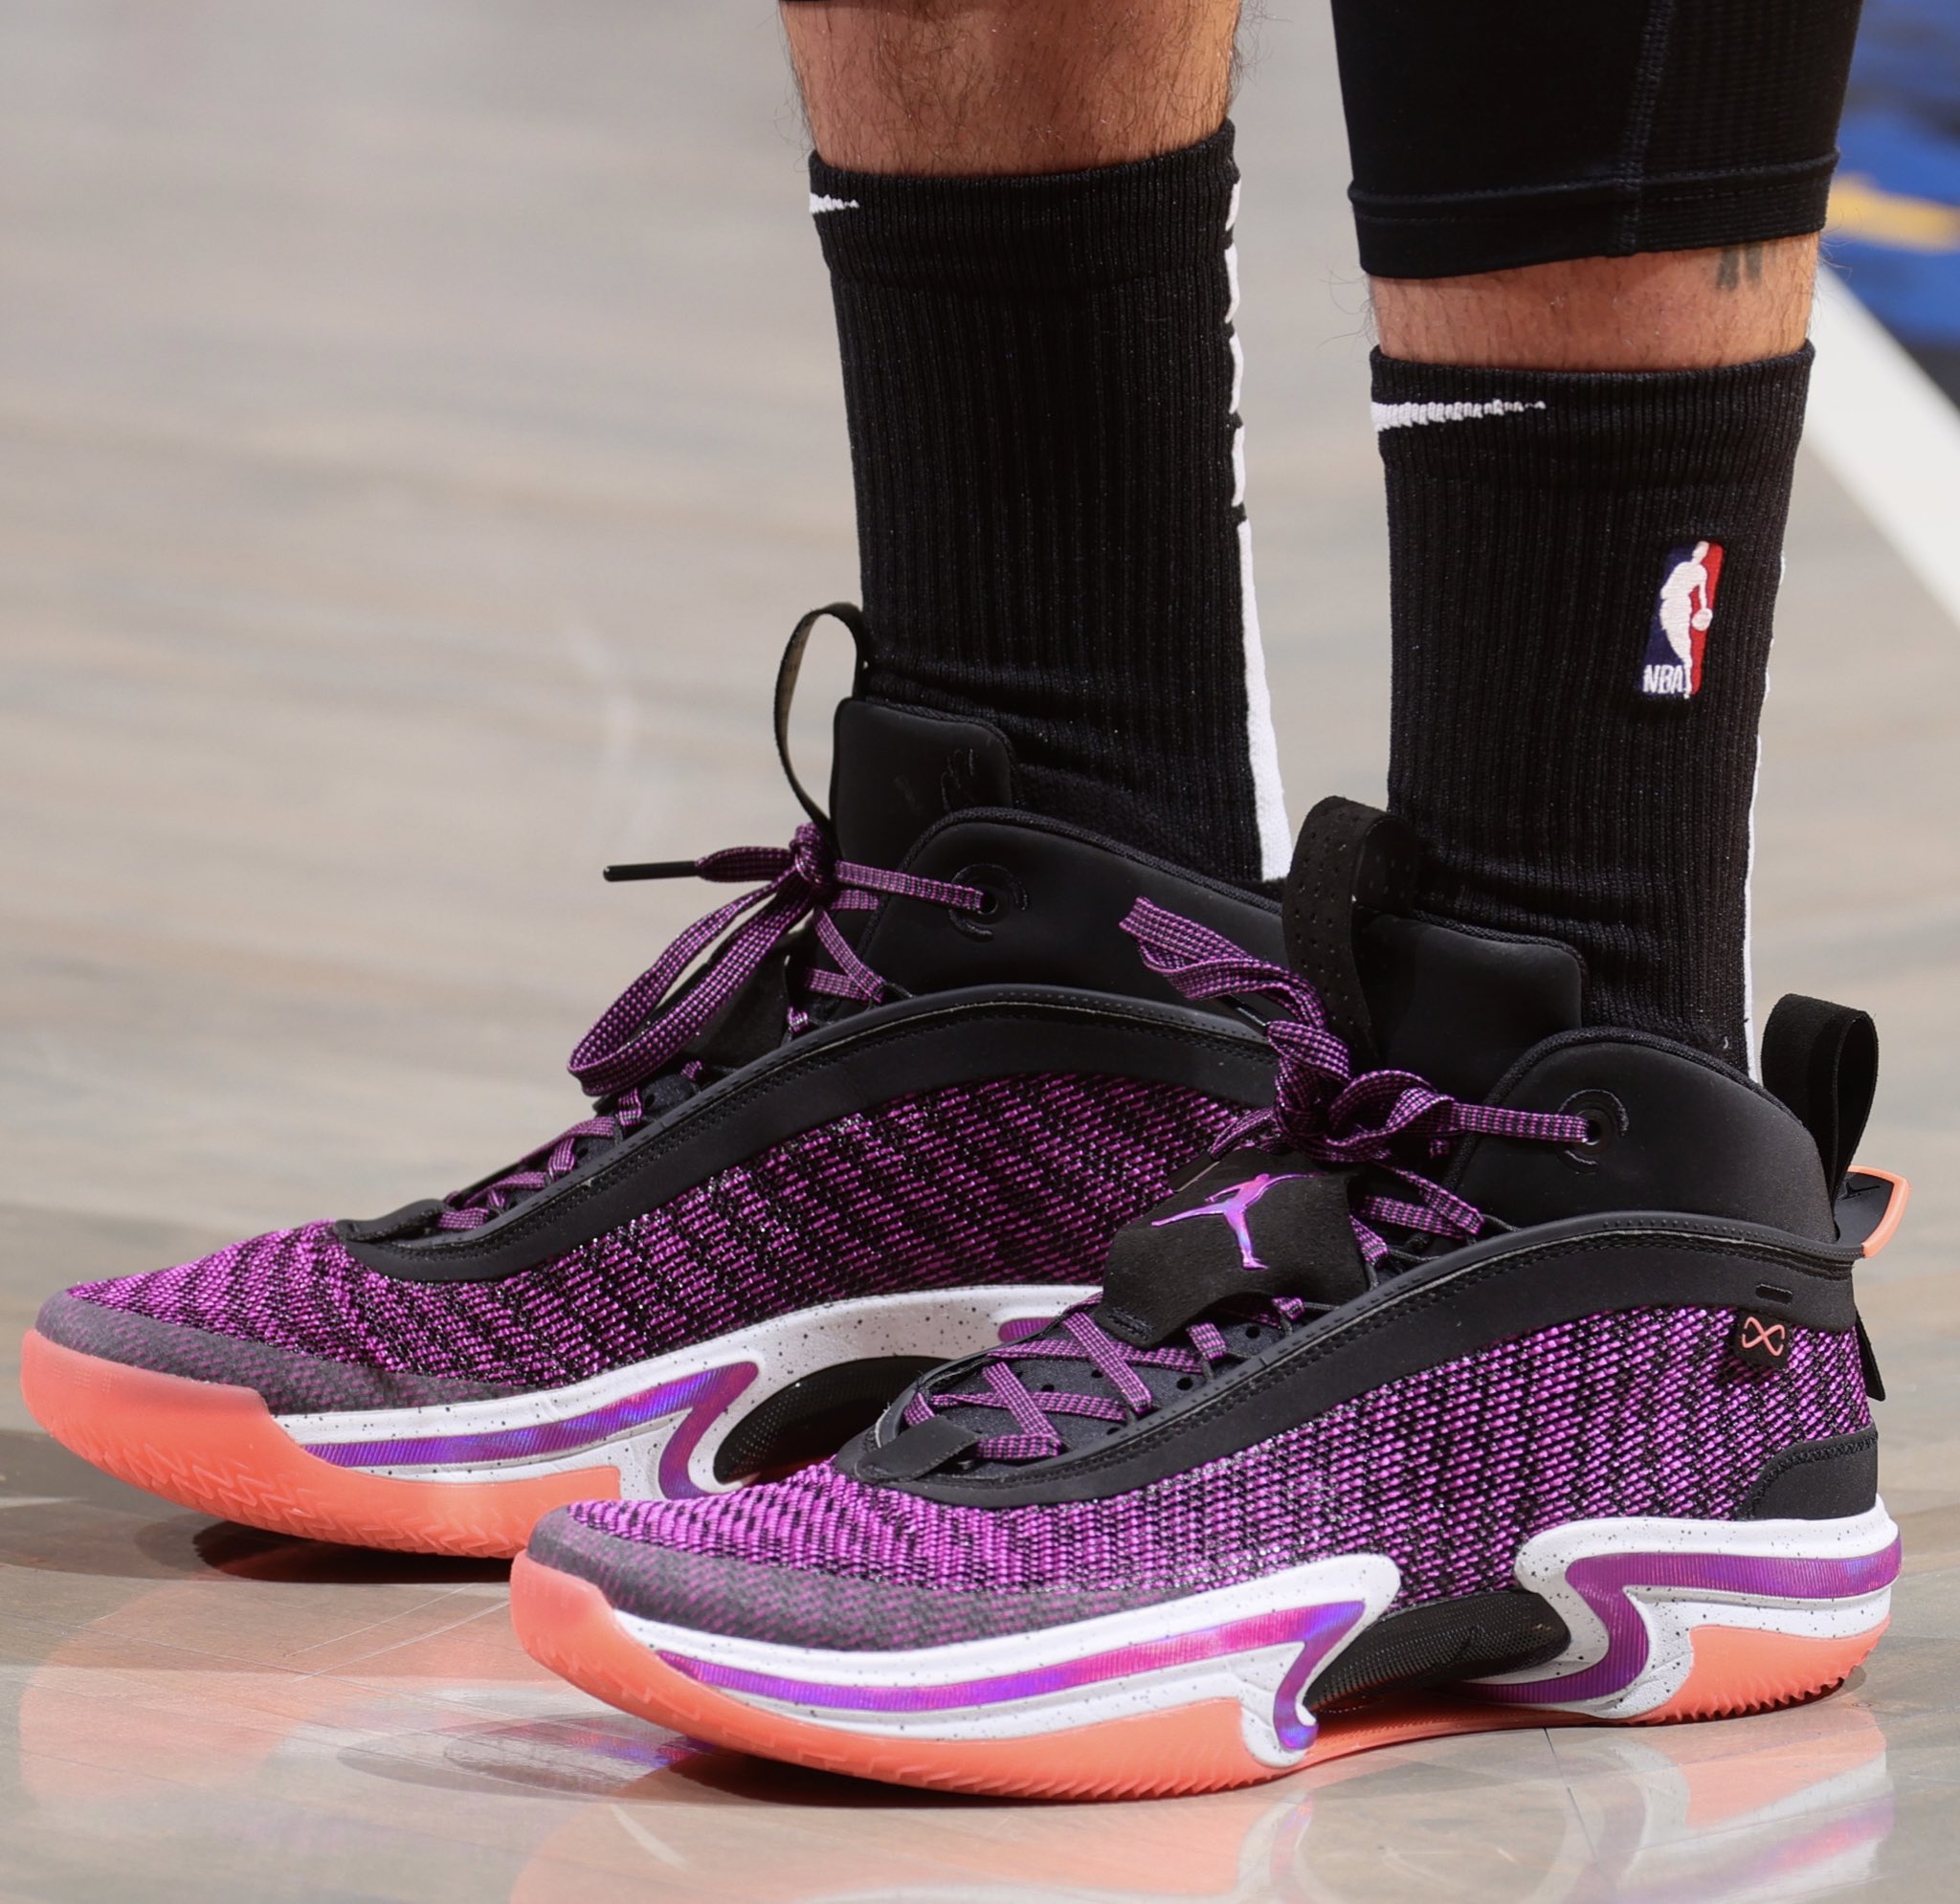 Jayson Tatum 率先着用 Jordan Brand 最新科技篮球鞋款 Air Jordan 36